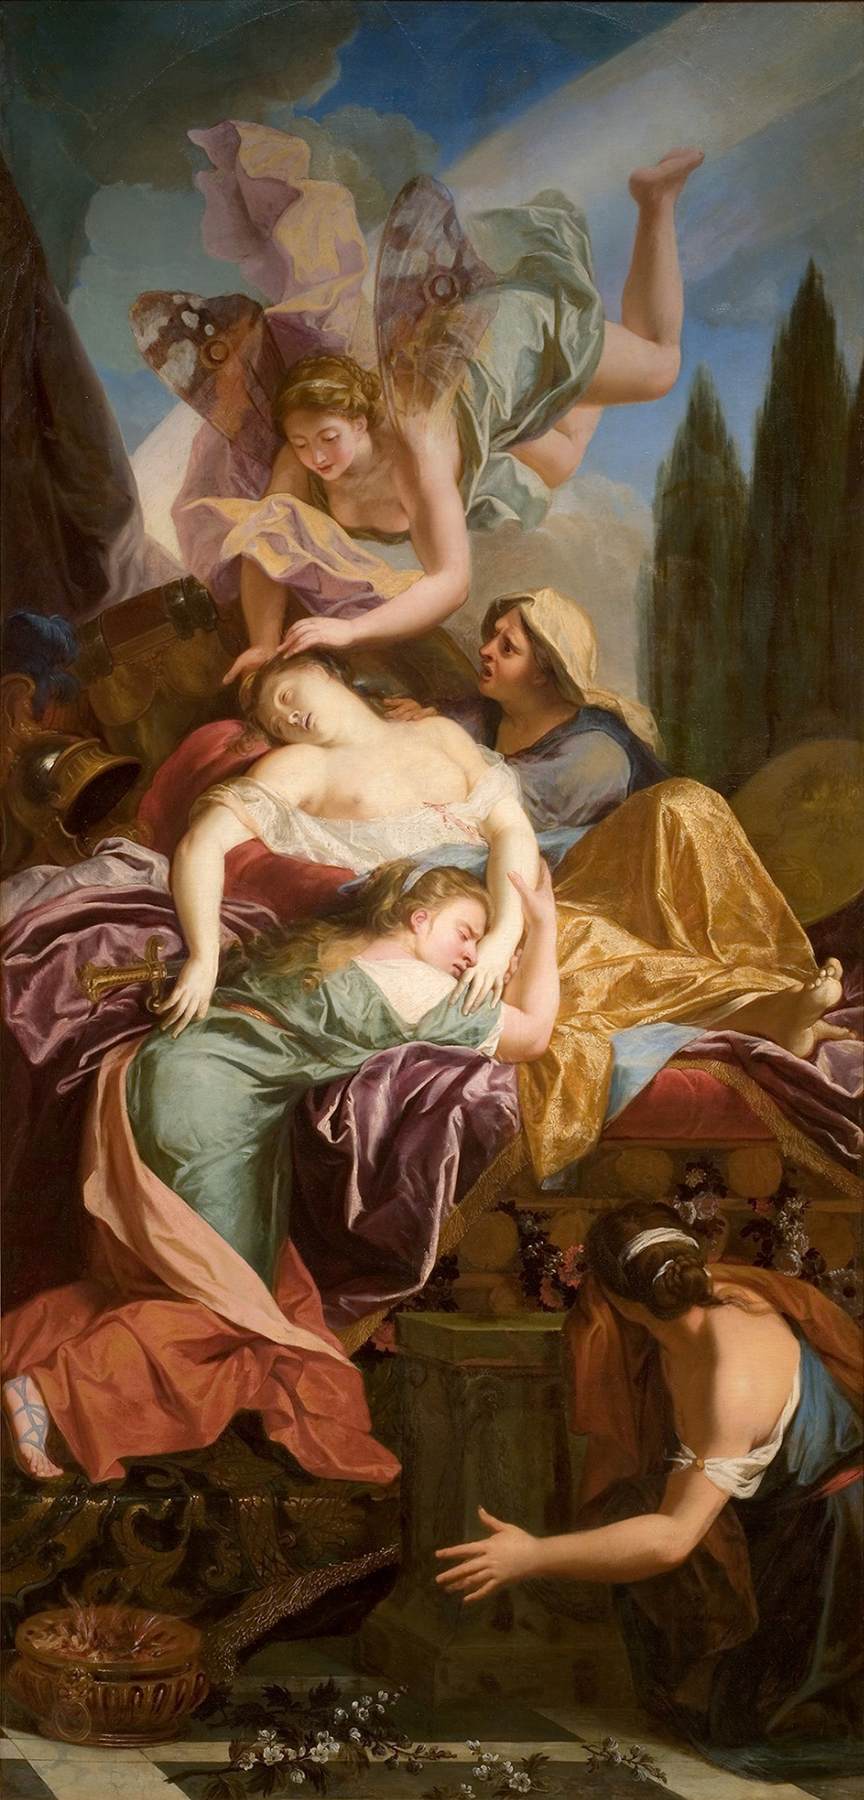 The Aeneid: The Death of Dido